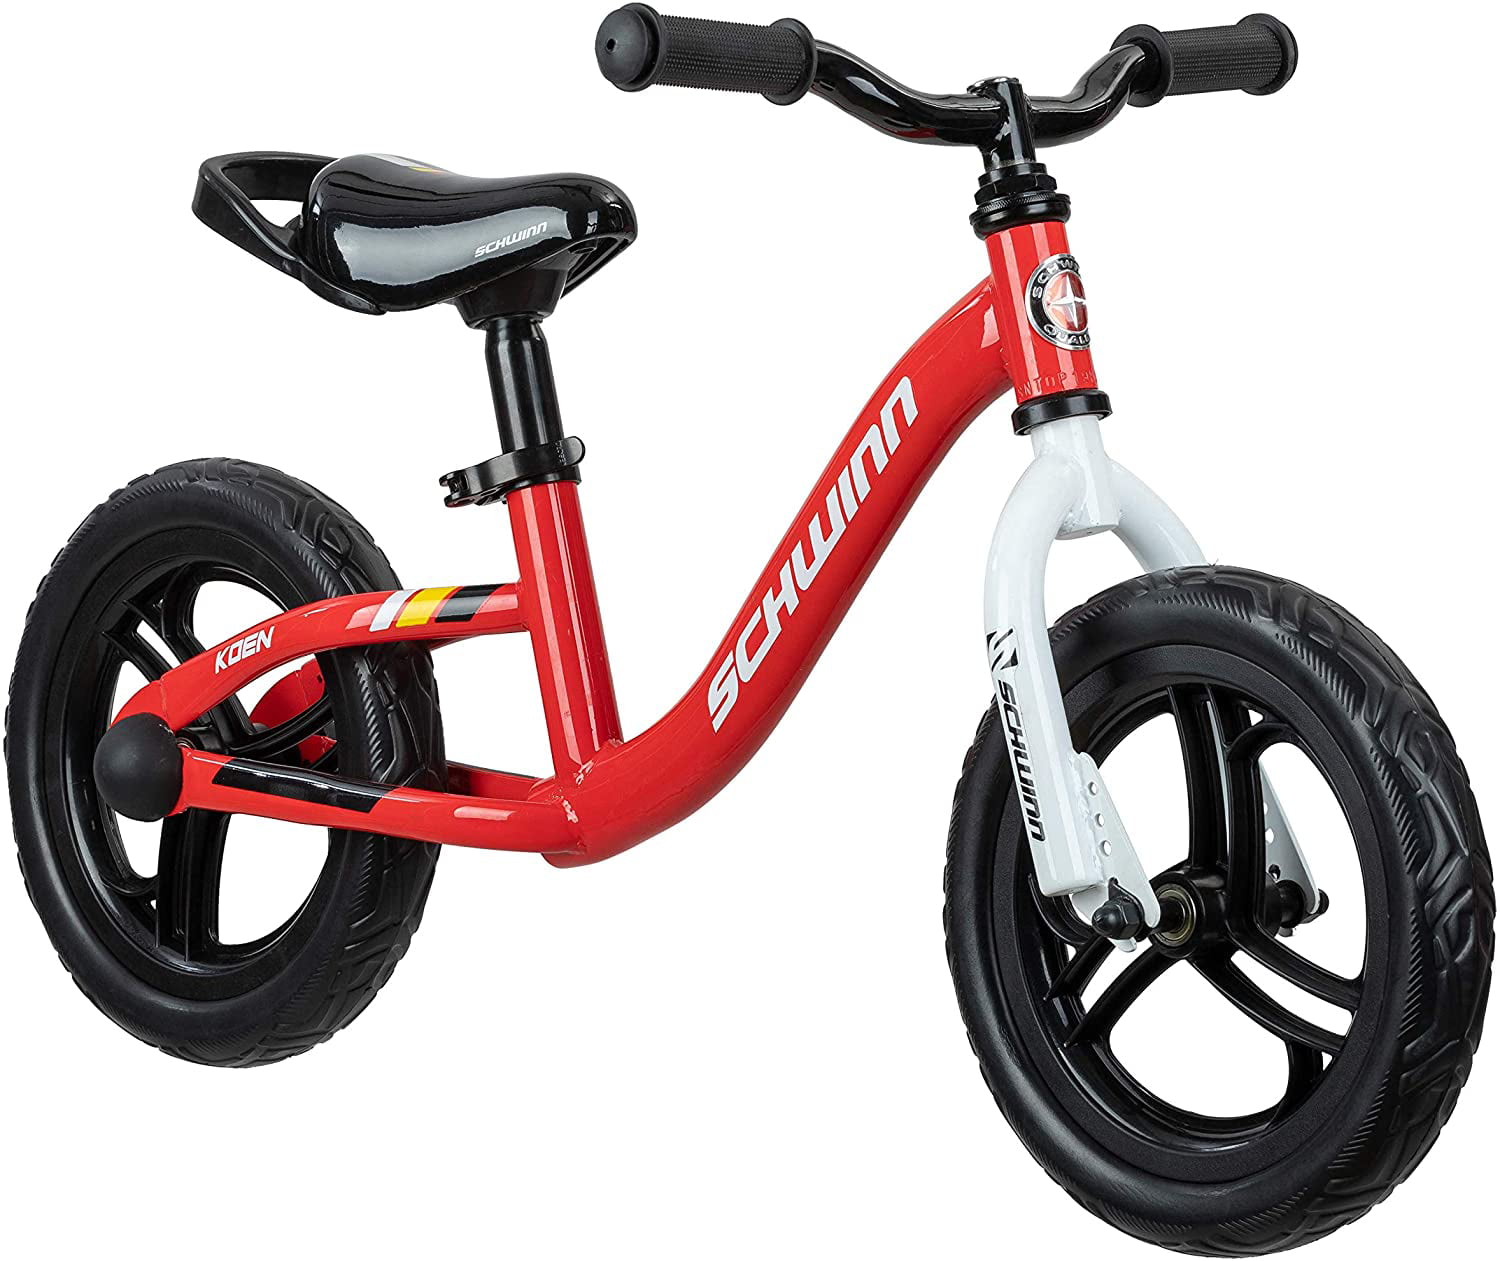 Schwinn Koen Boys Bike For Toddlers And Kids 12-inch Balance Bike 